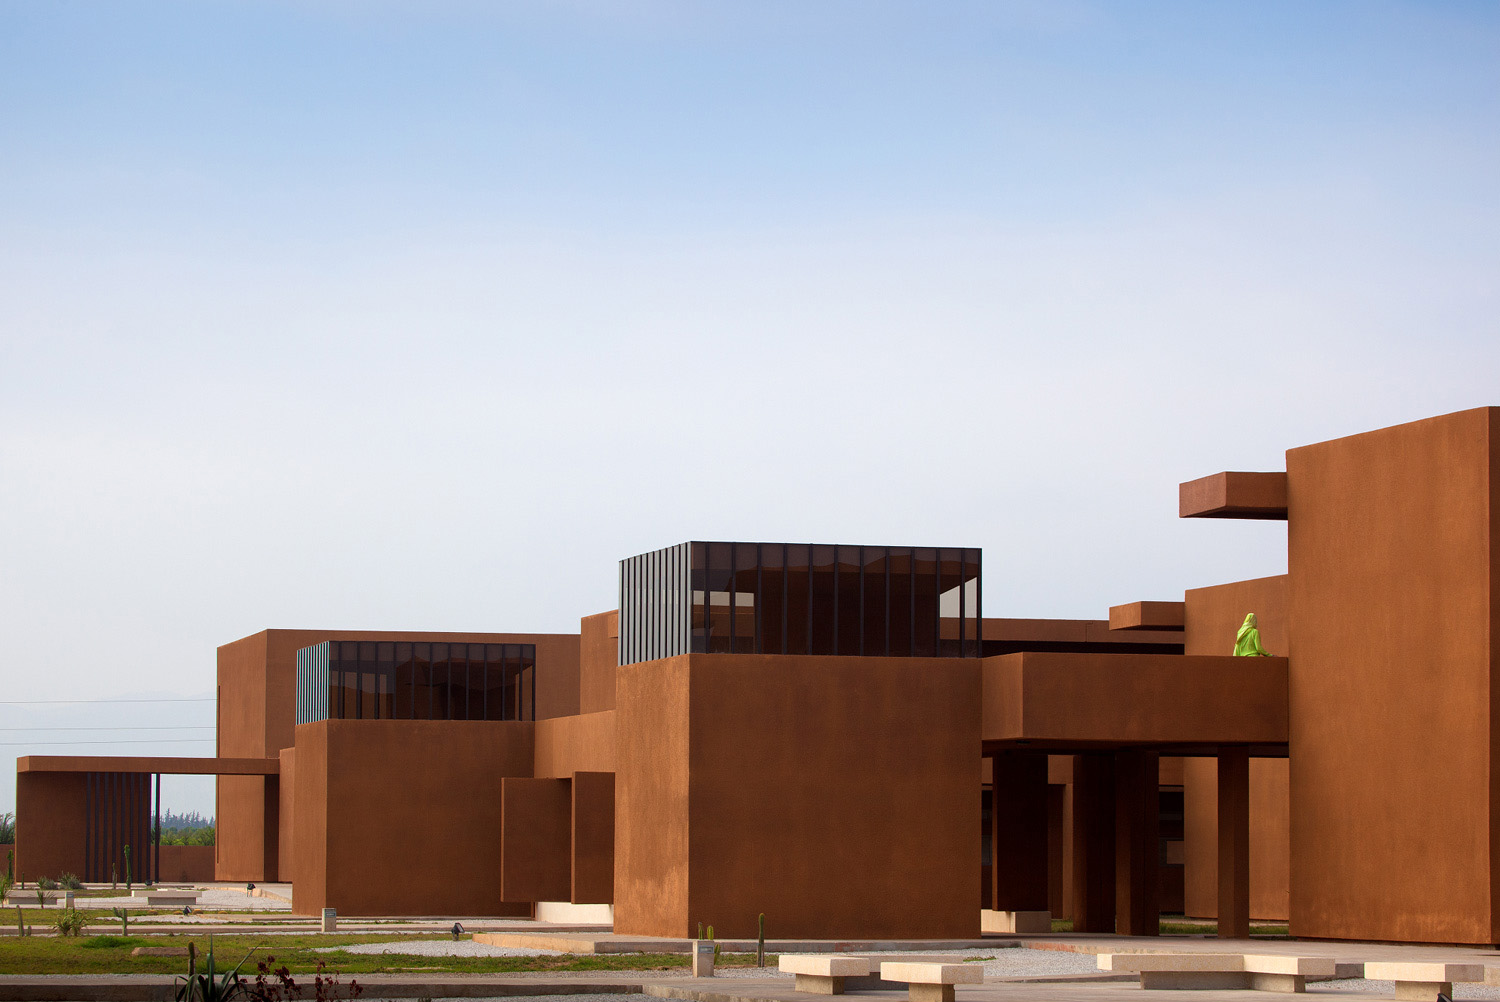 Université de Taroudant par Saad El Kabbaj, Driss Kettani et Mohamed Amine Siana sur Design Maroc 